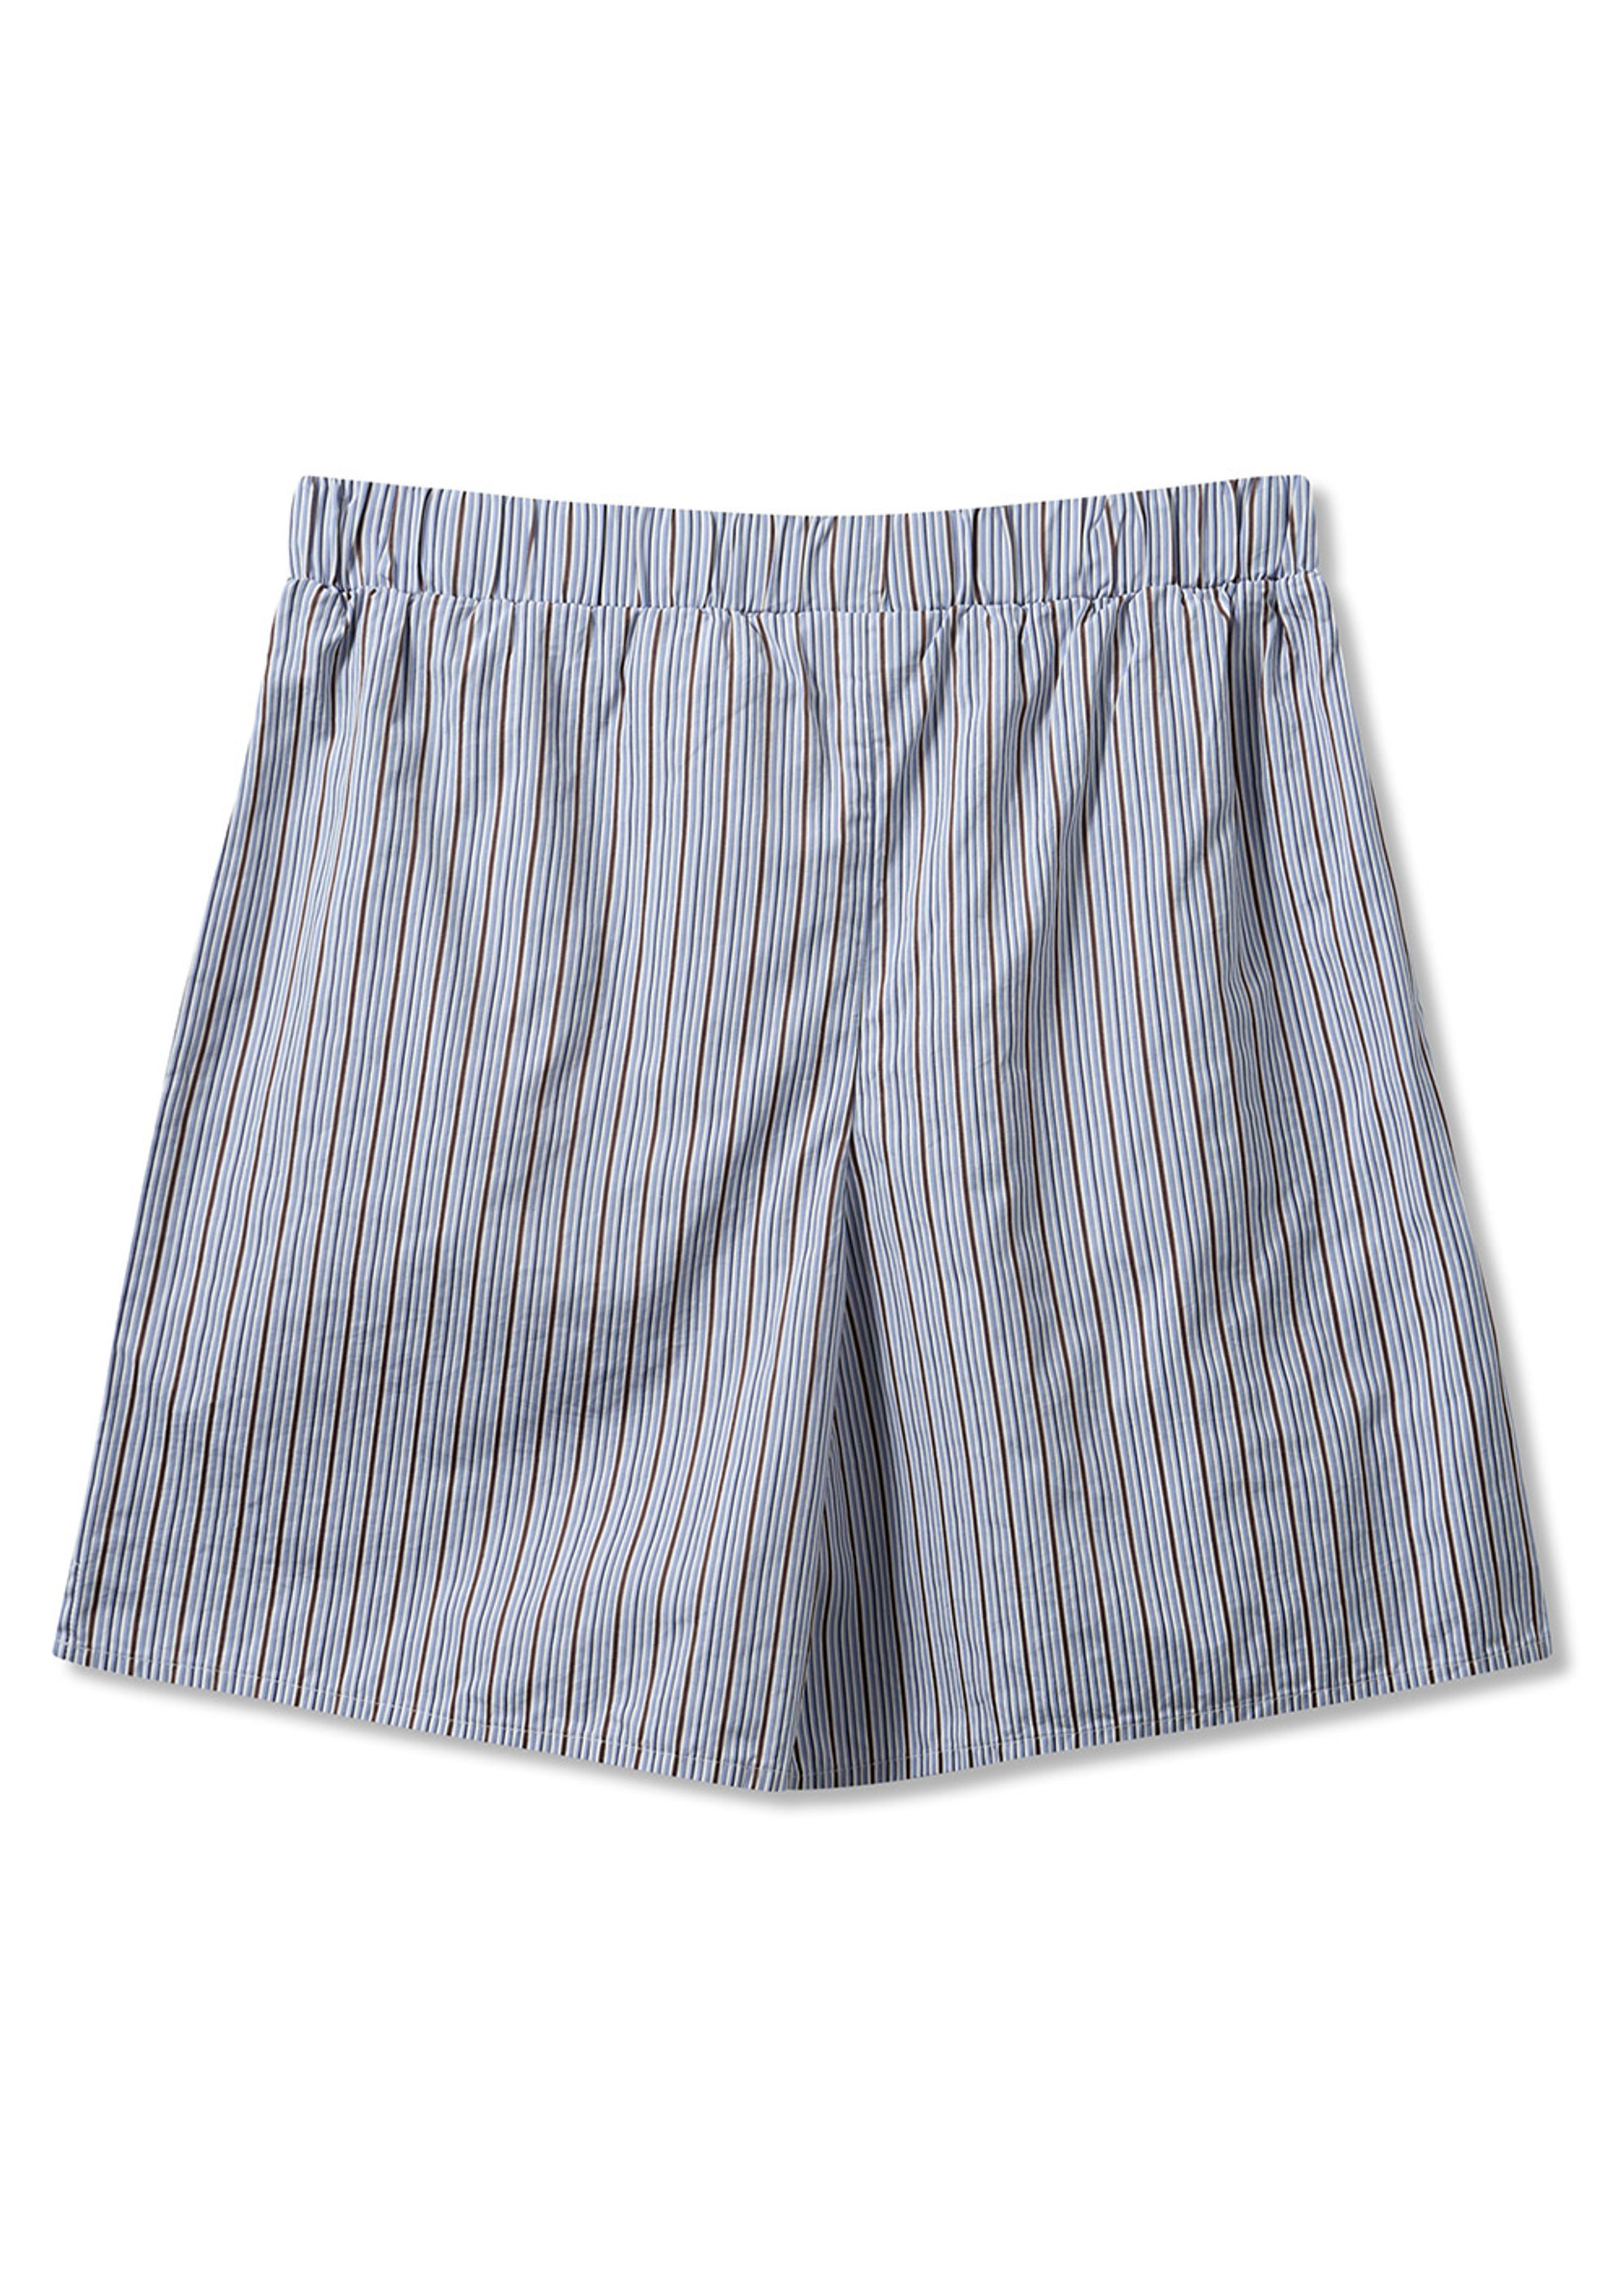 H2OFagerholt - Shorts - Pj Shorts - Blue Stripe